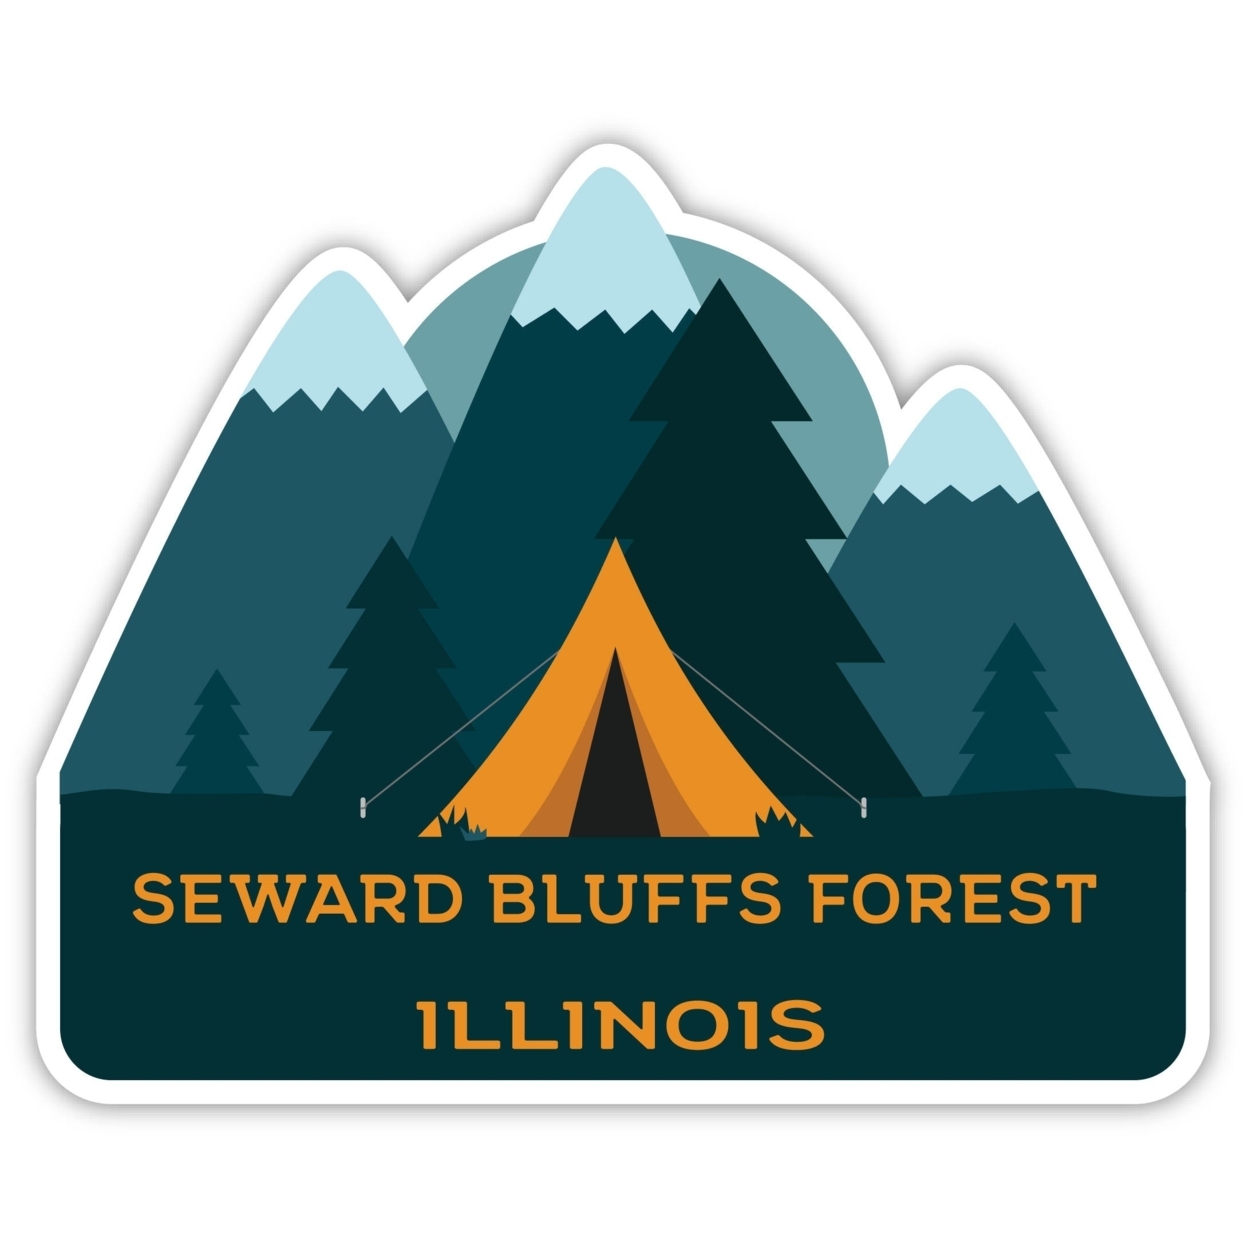 Seward Bluffs Forest Illinois Souvenir Decorative Stickers (Choose Theme And Size) - Single Unit, 2-Inch, Tent